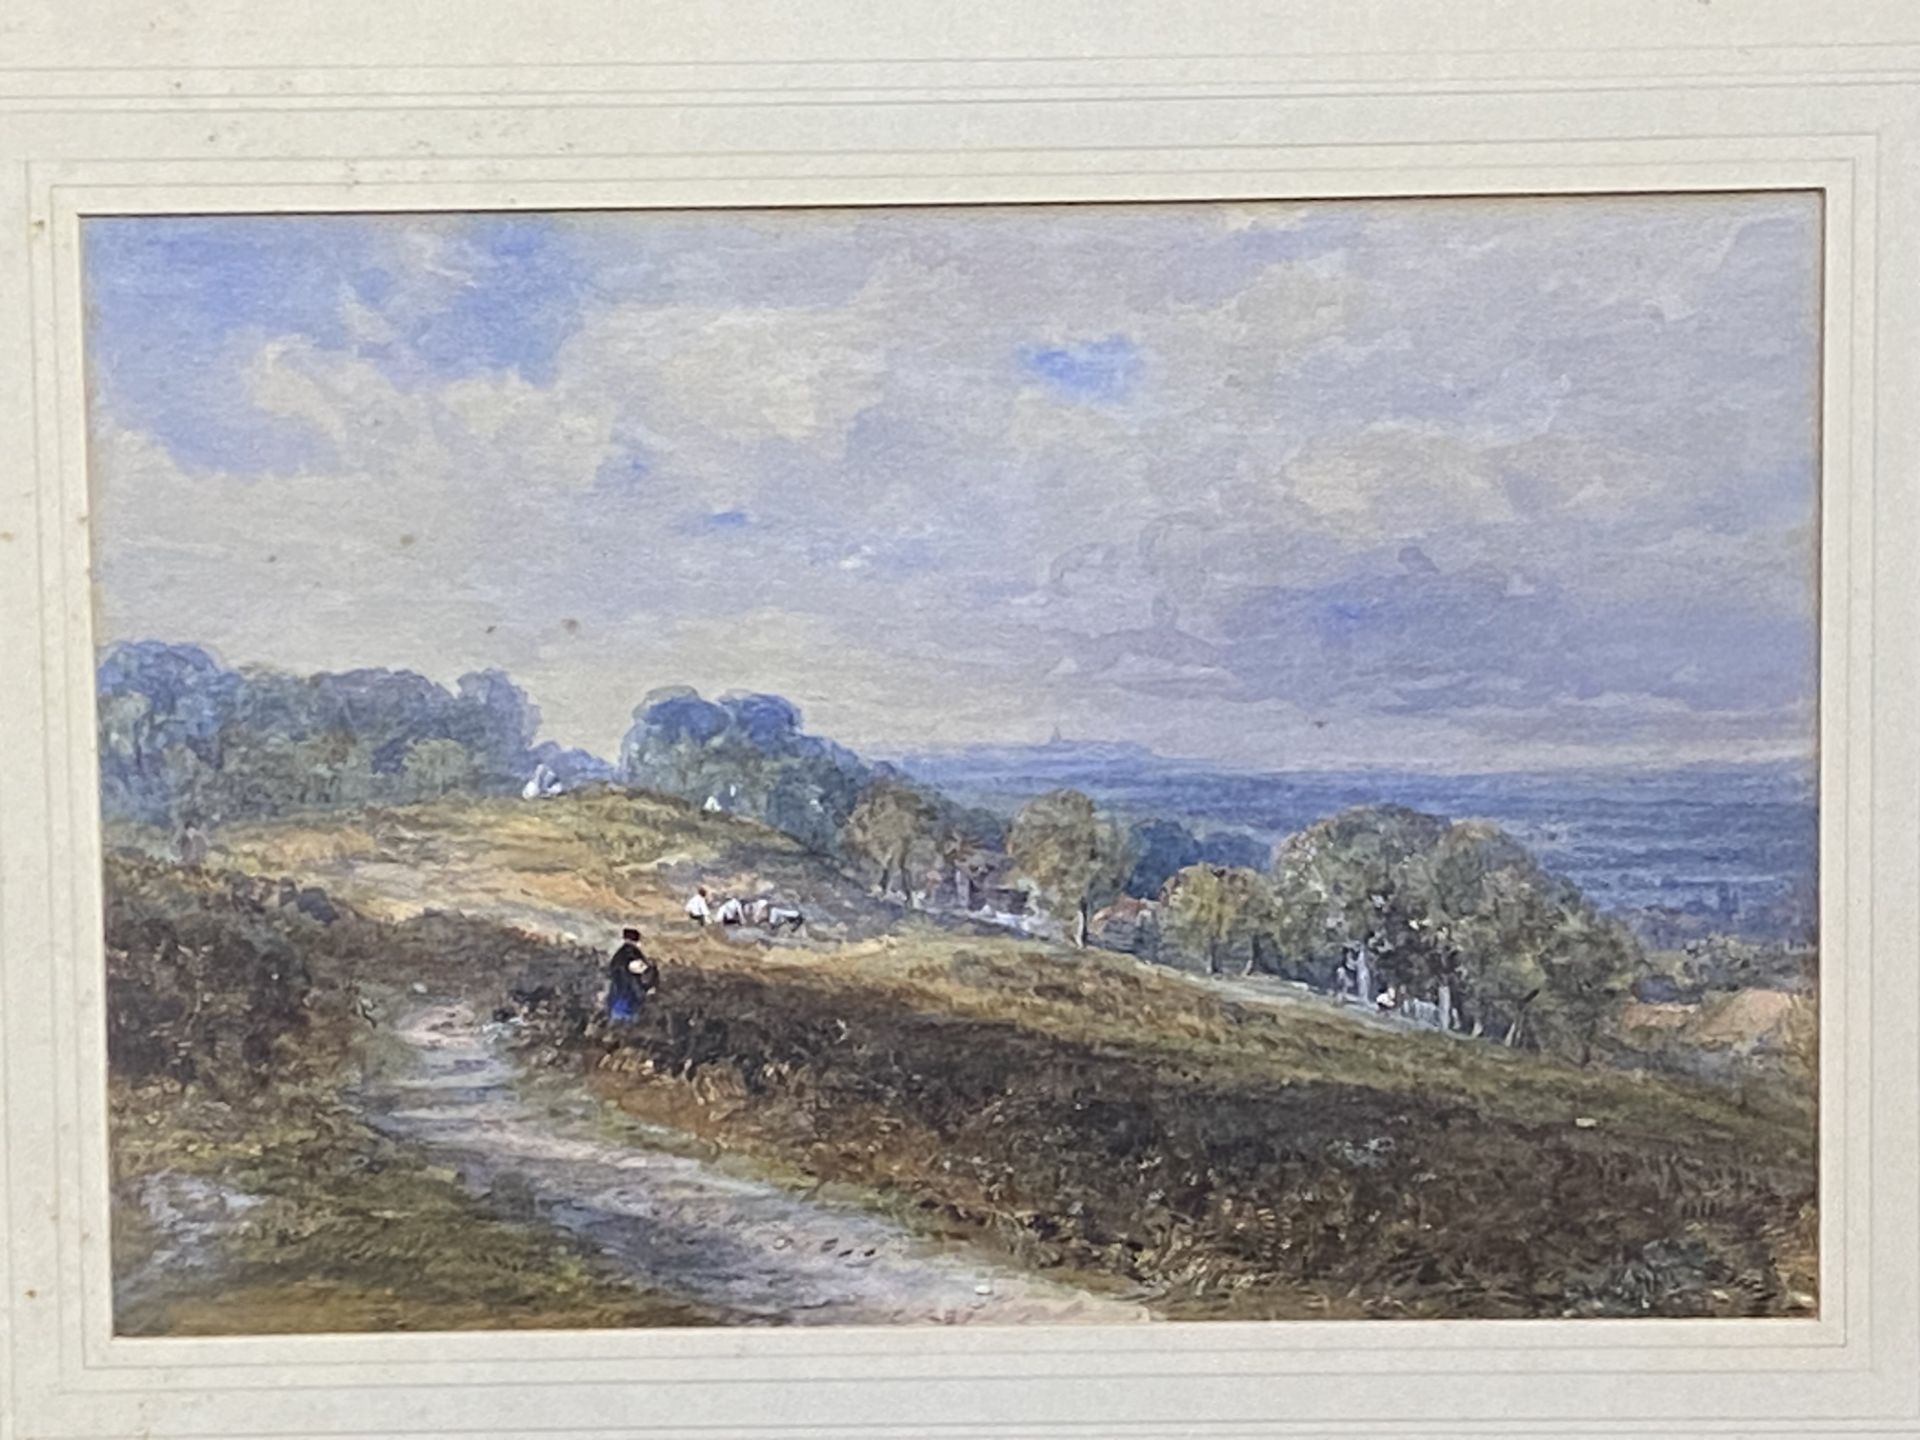 Framed and glazed watercolour "On Hampstead Heath" written to border J Ford - Bild 3 aus 3